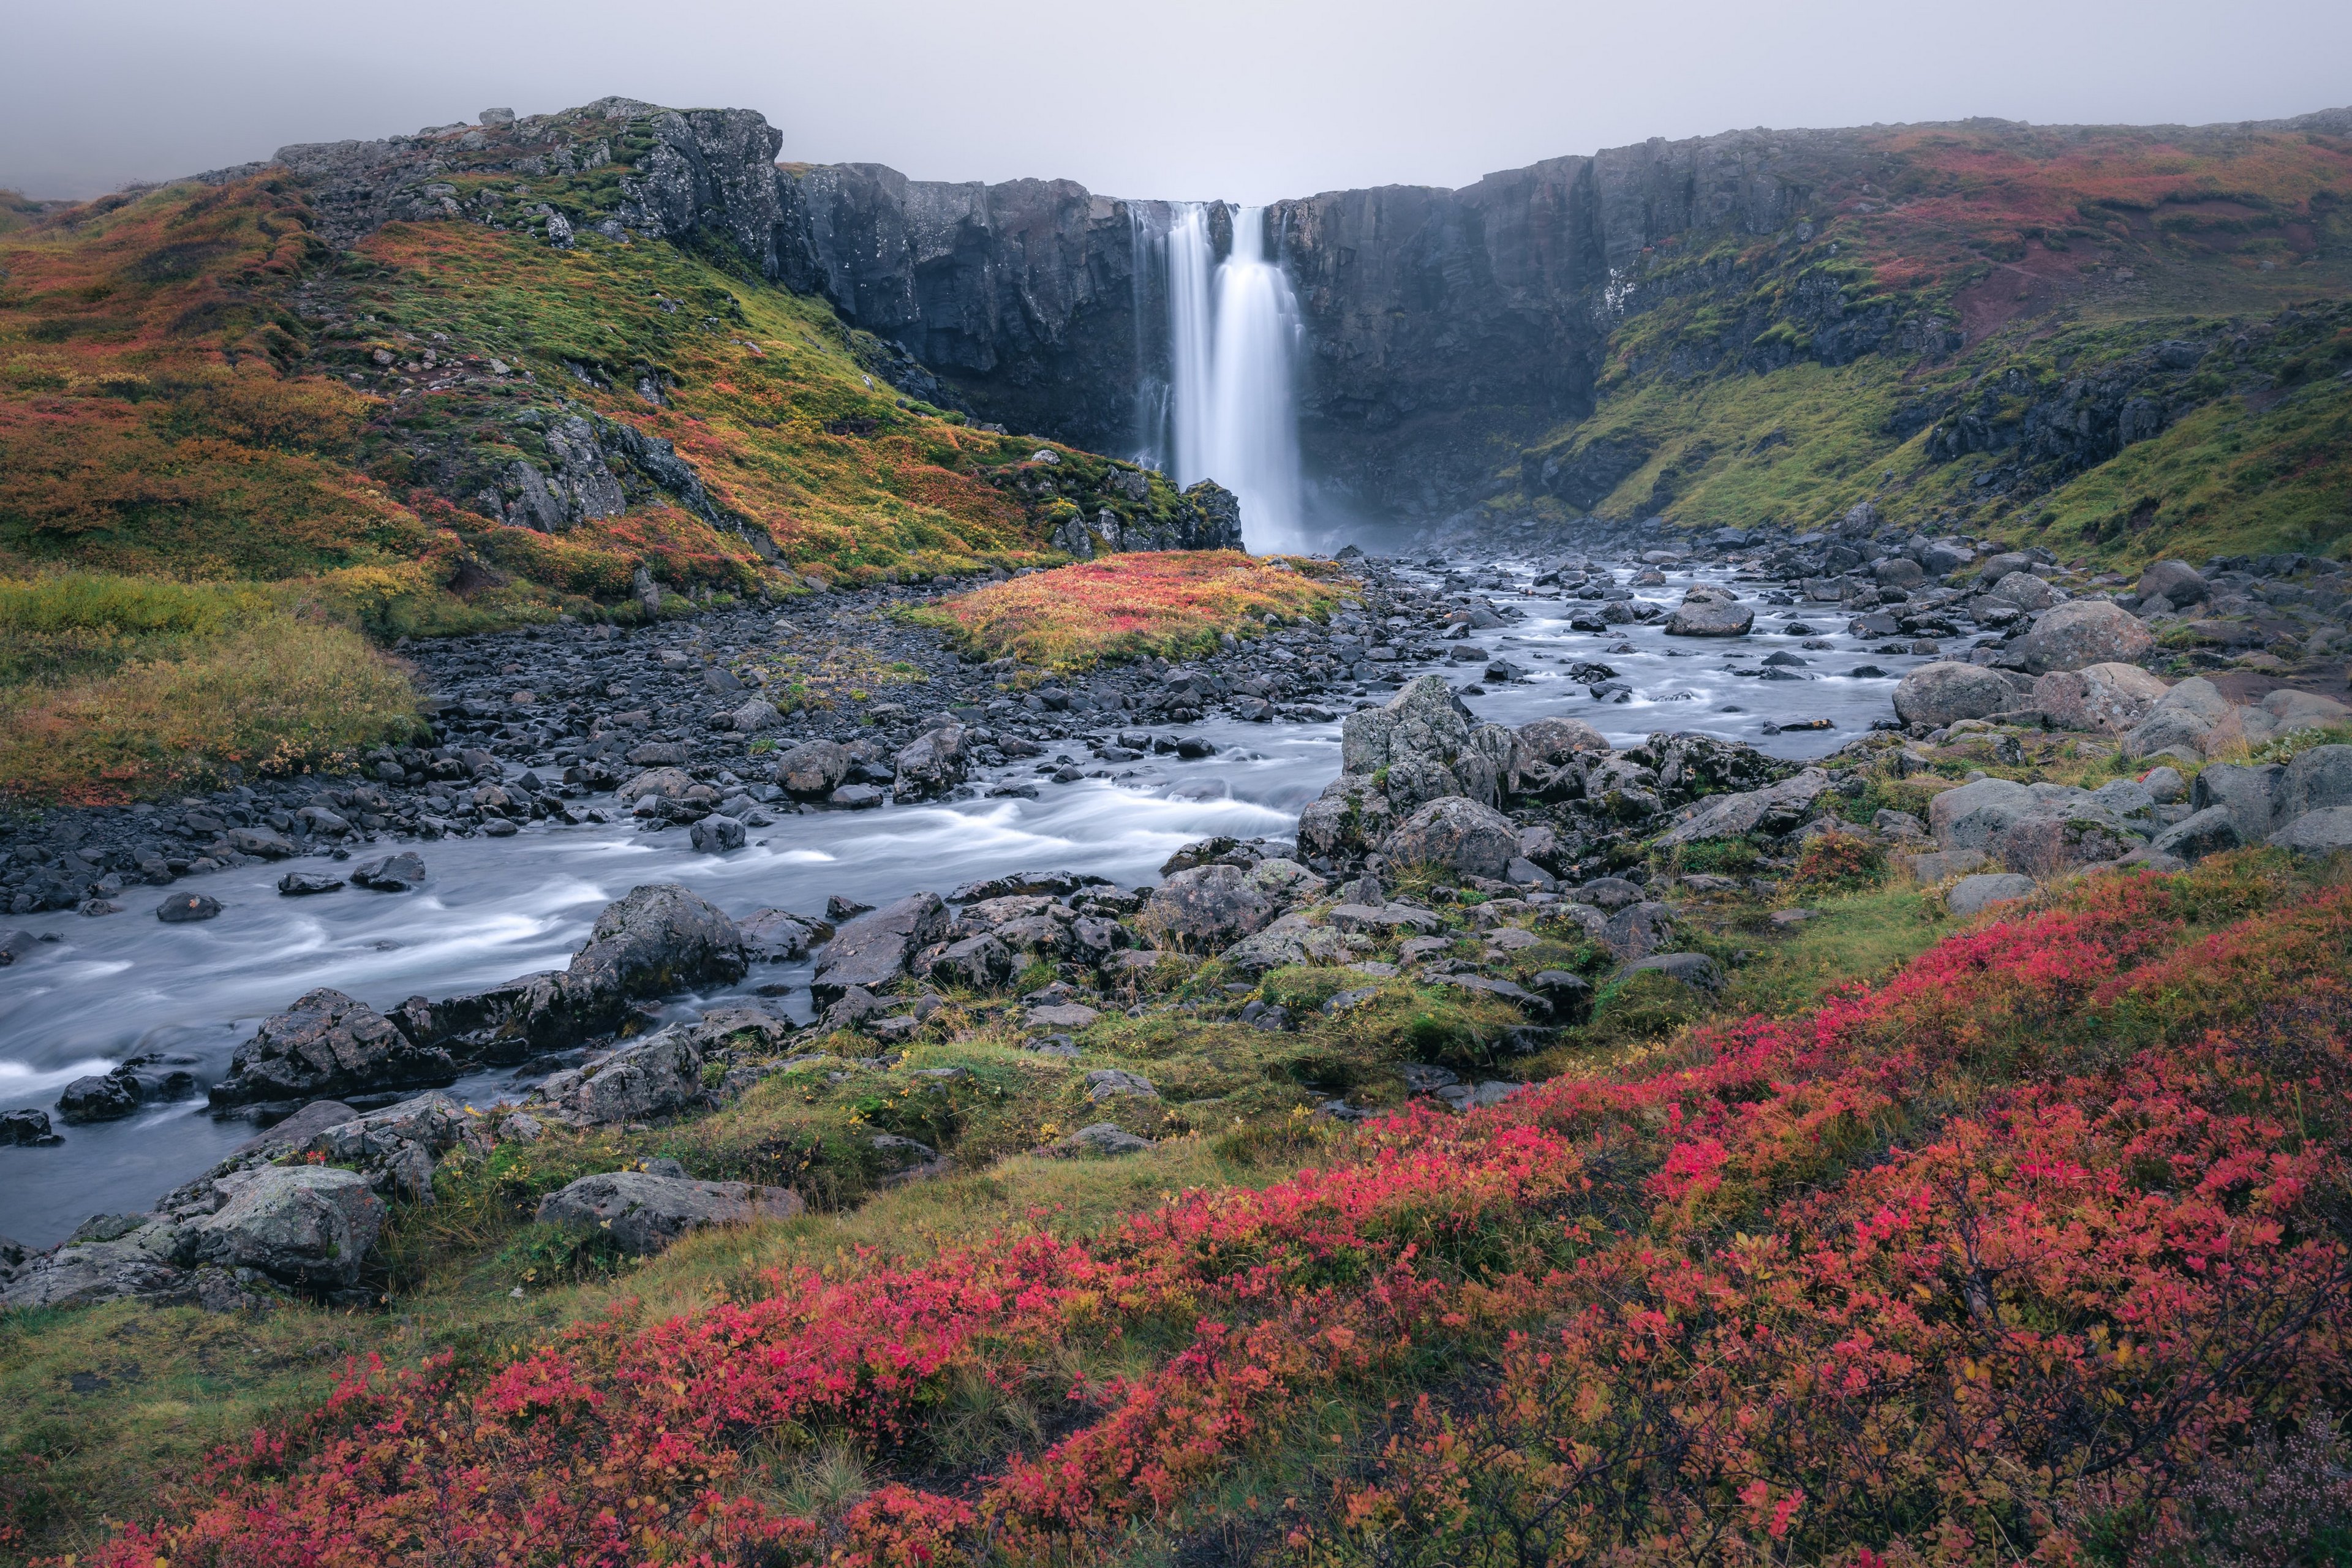 General 3840x2560 Seljalandsfoss Waterfall Iceland nature mist stream stones rocks plants